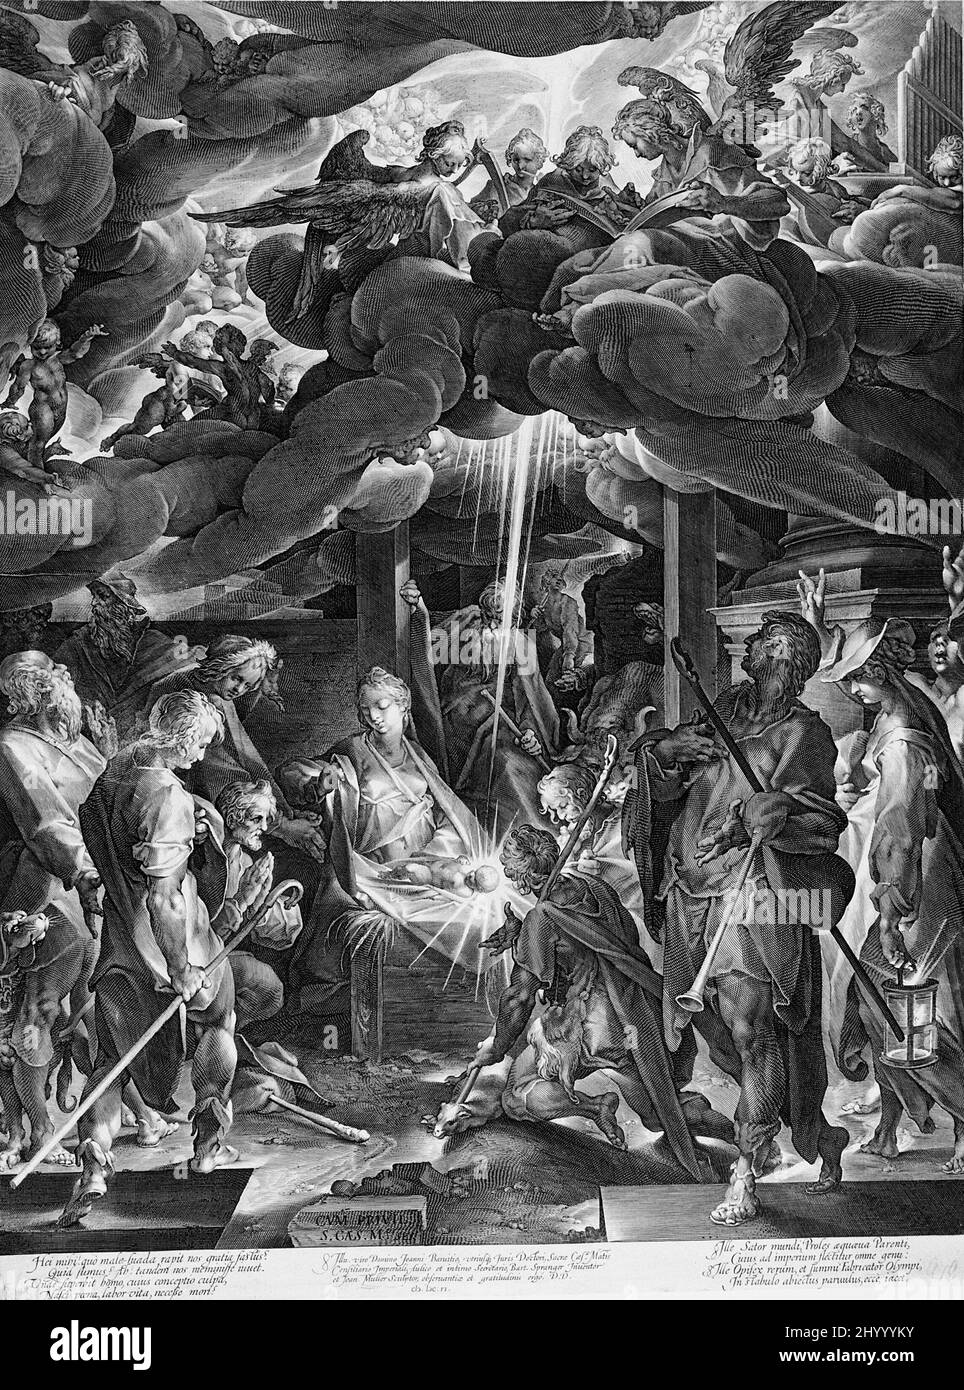 The Adoration of the Shepherds. Jan Harmensz. Muller (Holland, Amsterdam, 1571-1628)Bartholomeus Spranger (after) (Flanders, Antwerp, 1546-1611). Holland, 1606. Prints; engravings. Engraving Stock Photo